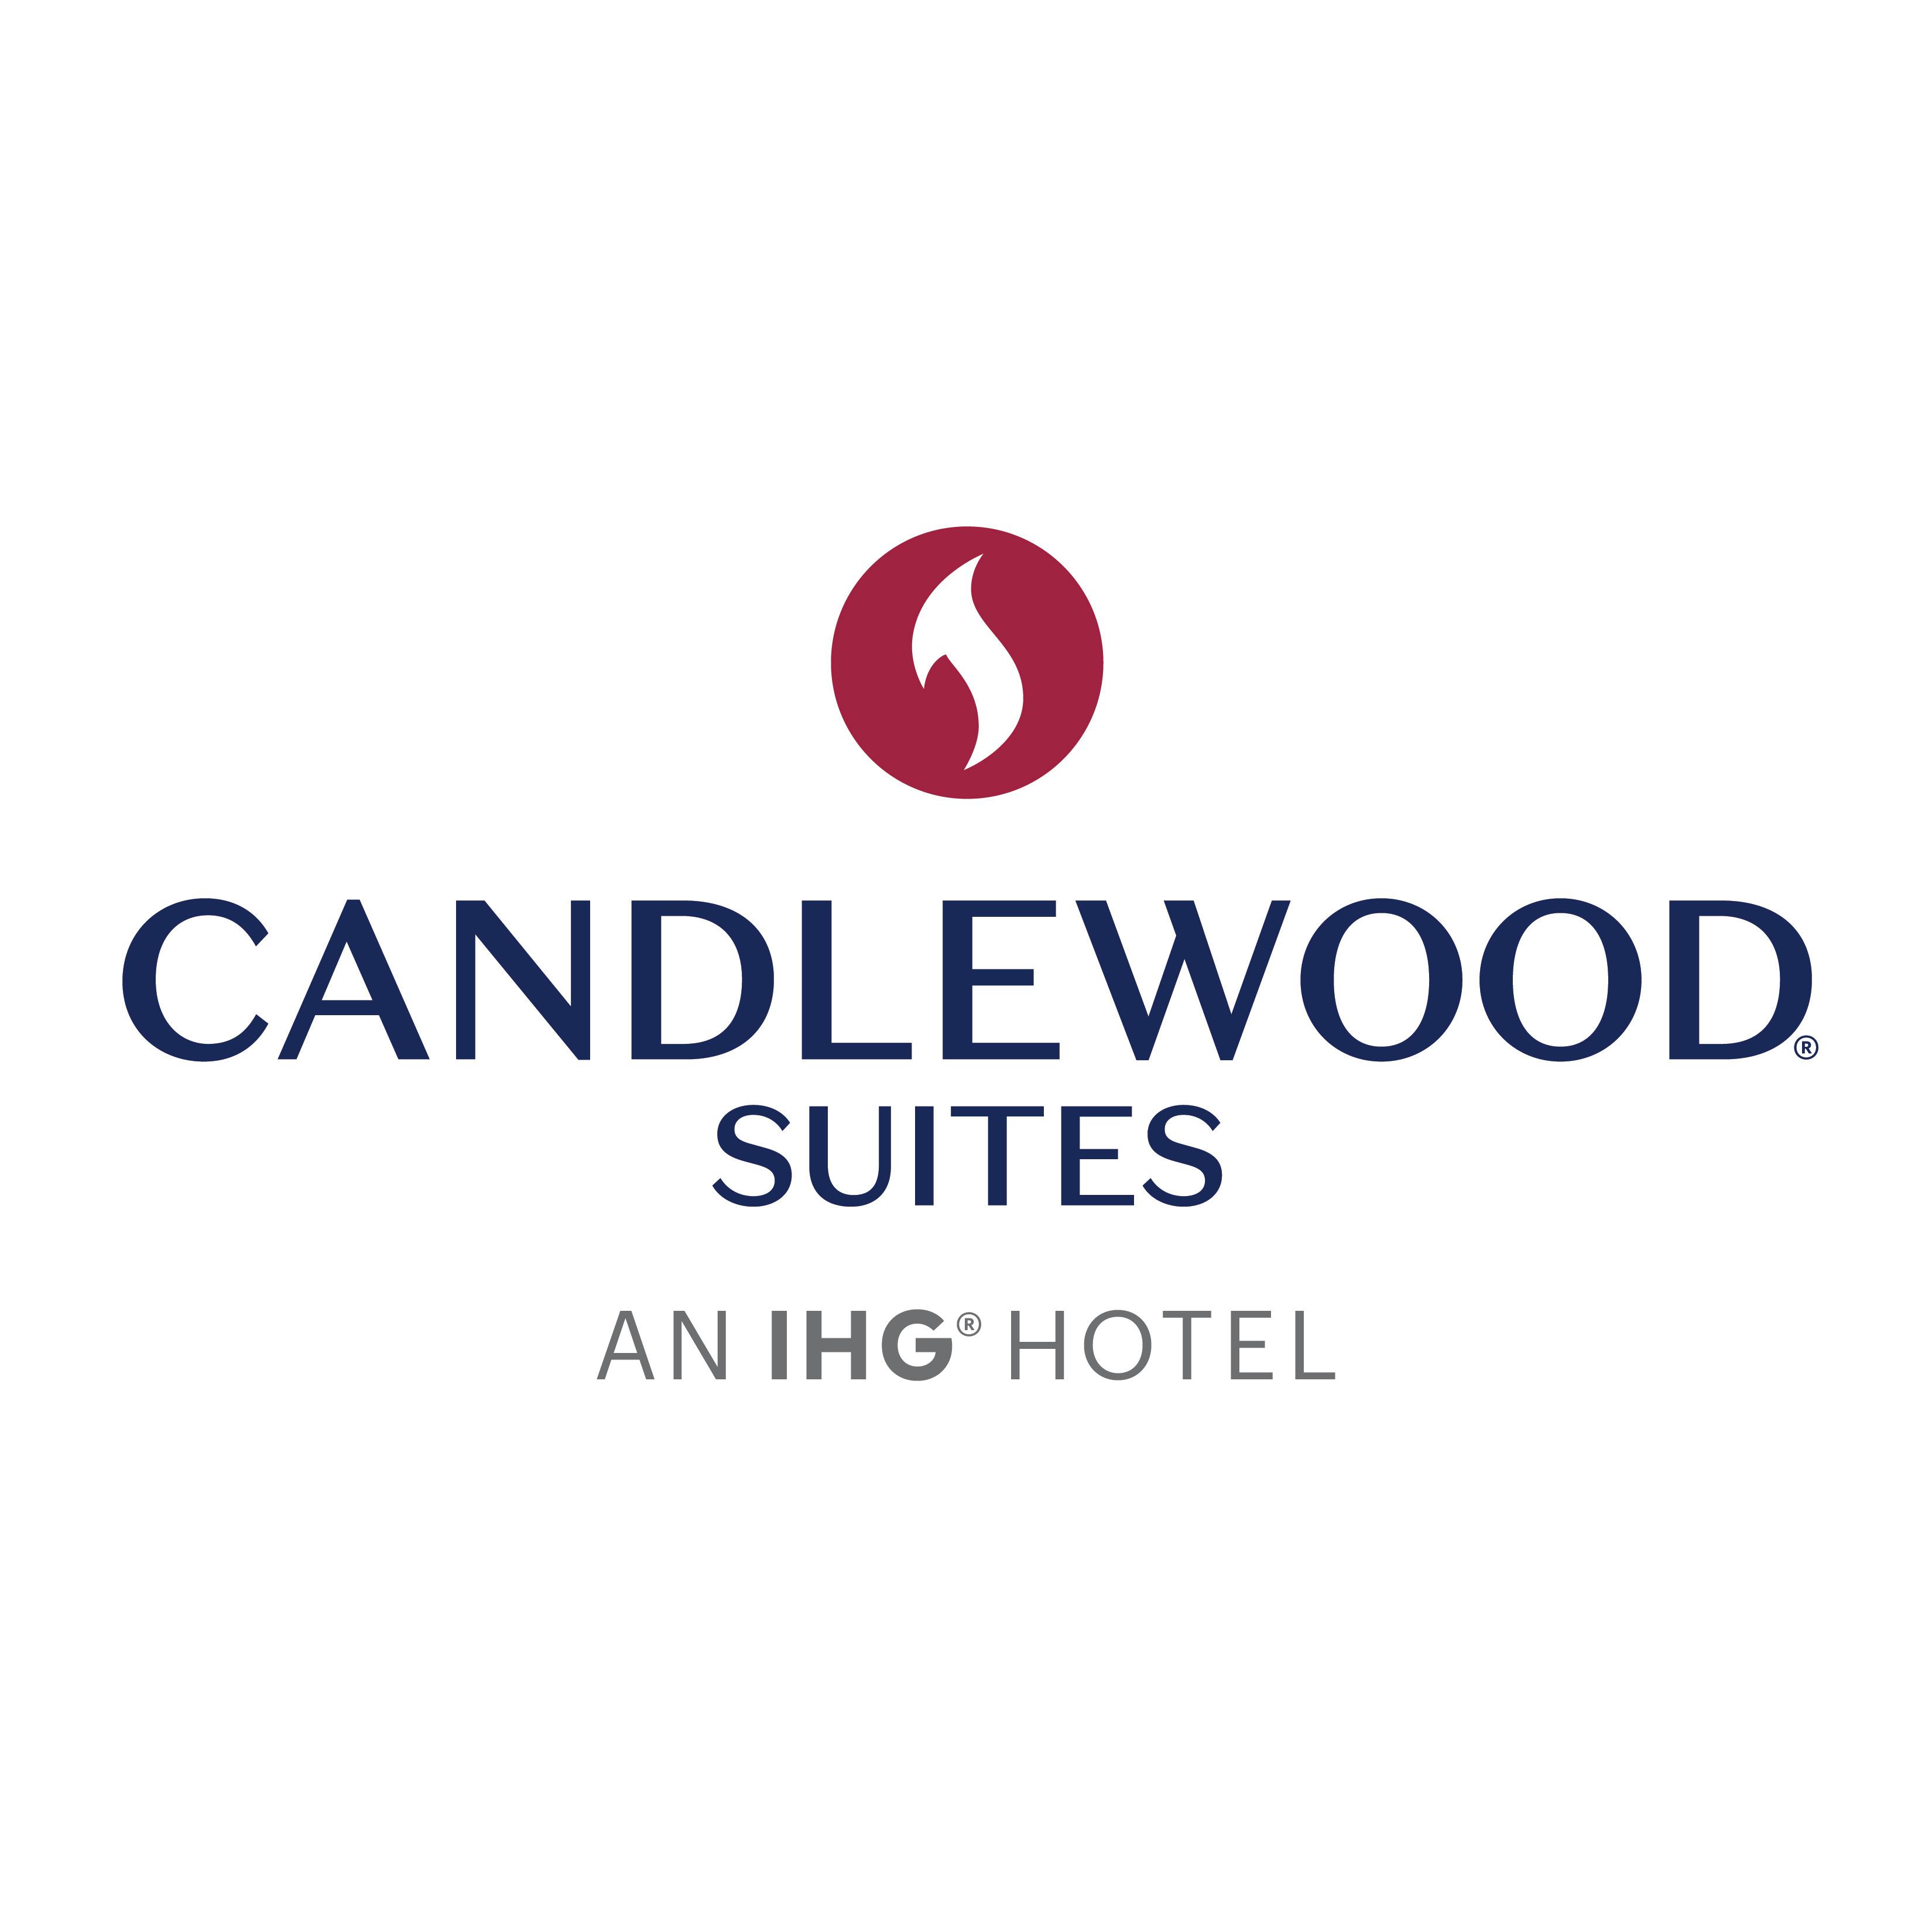 Candlewood Suites Turlock, an IHG Hotel